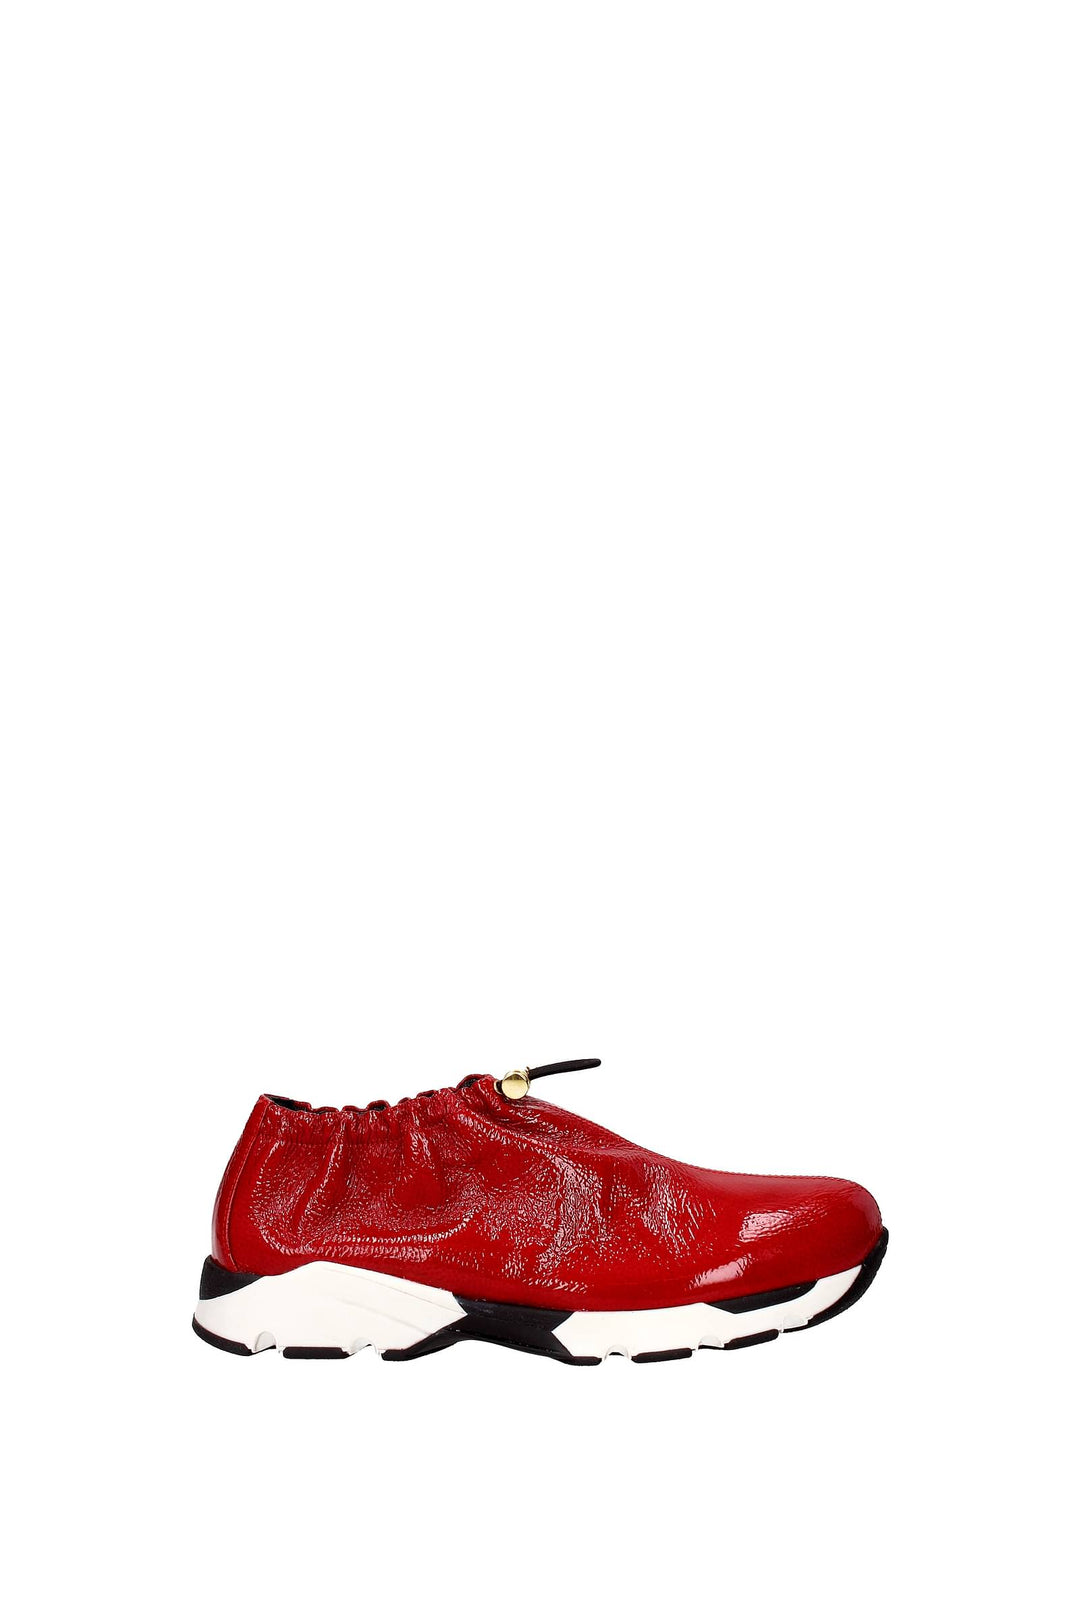 Sneakers Vernice Rosso - Marni - Donna